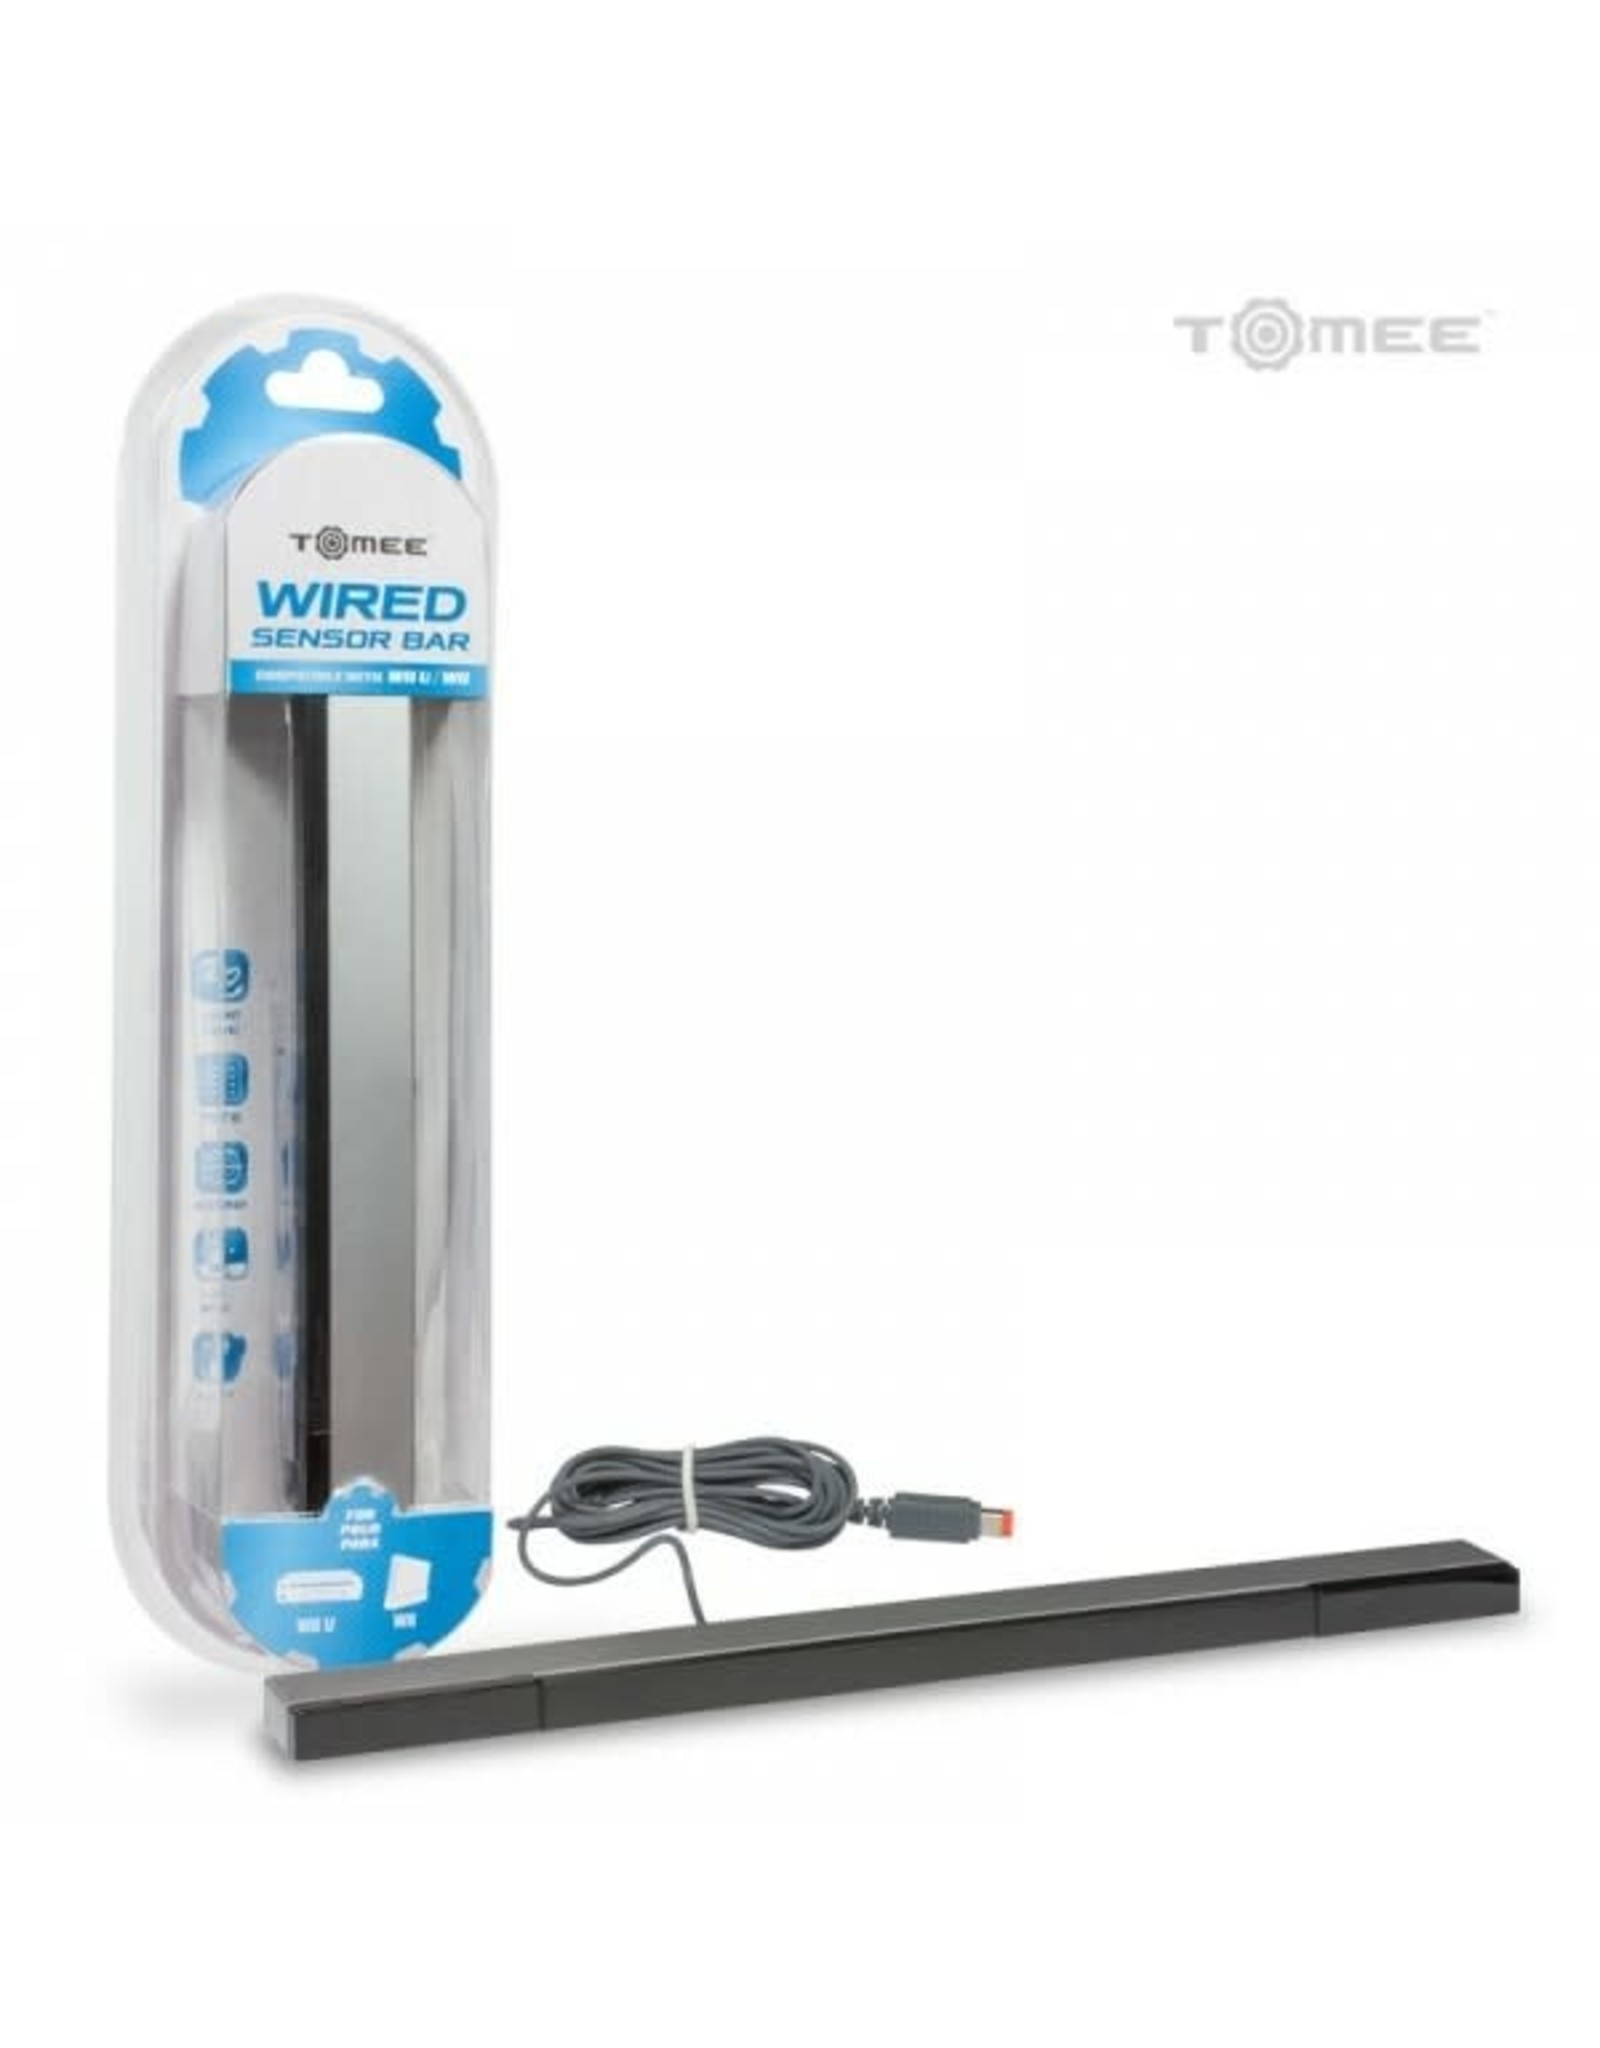 Wii Wii Wired Sensor Bar (Tomee)